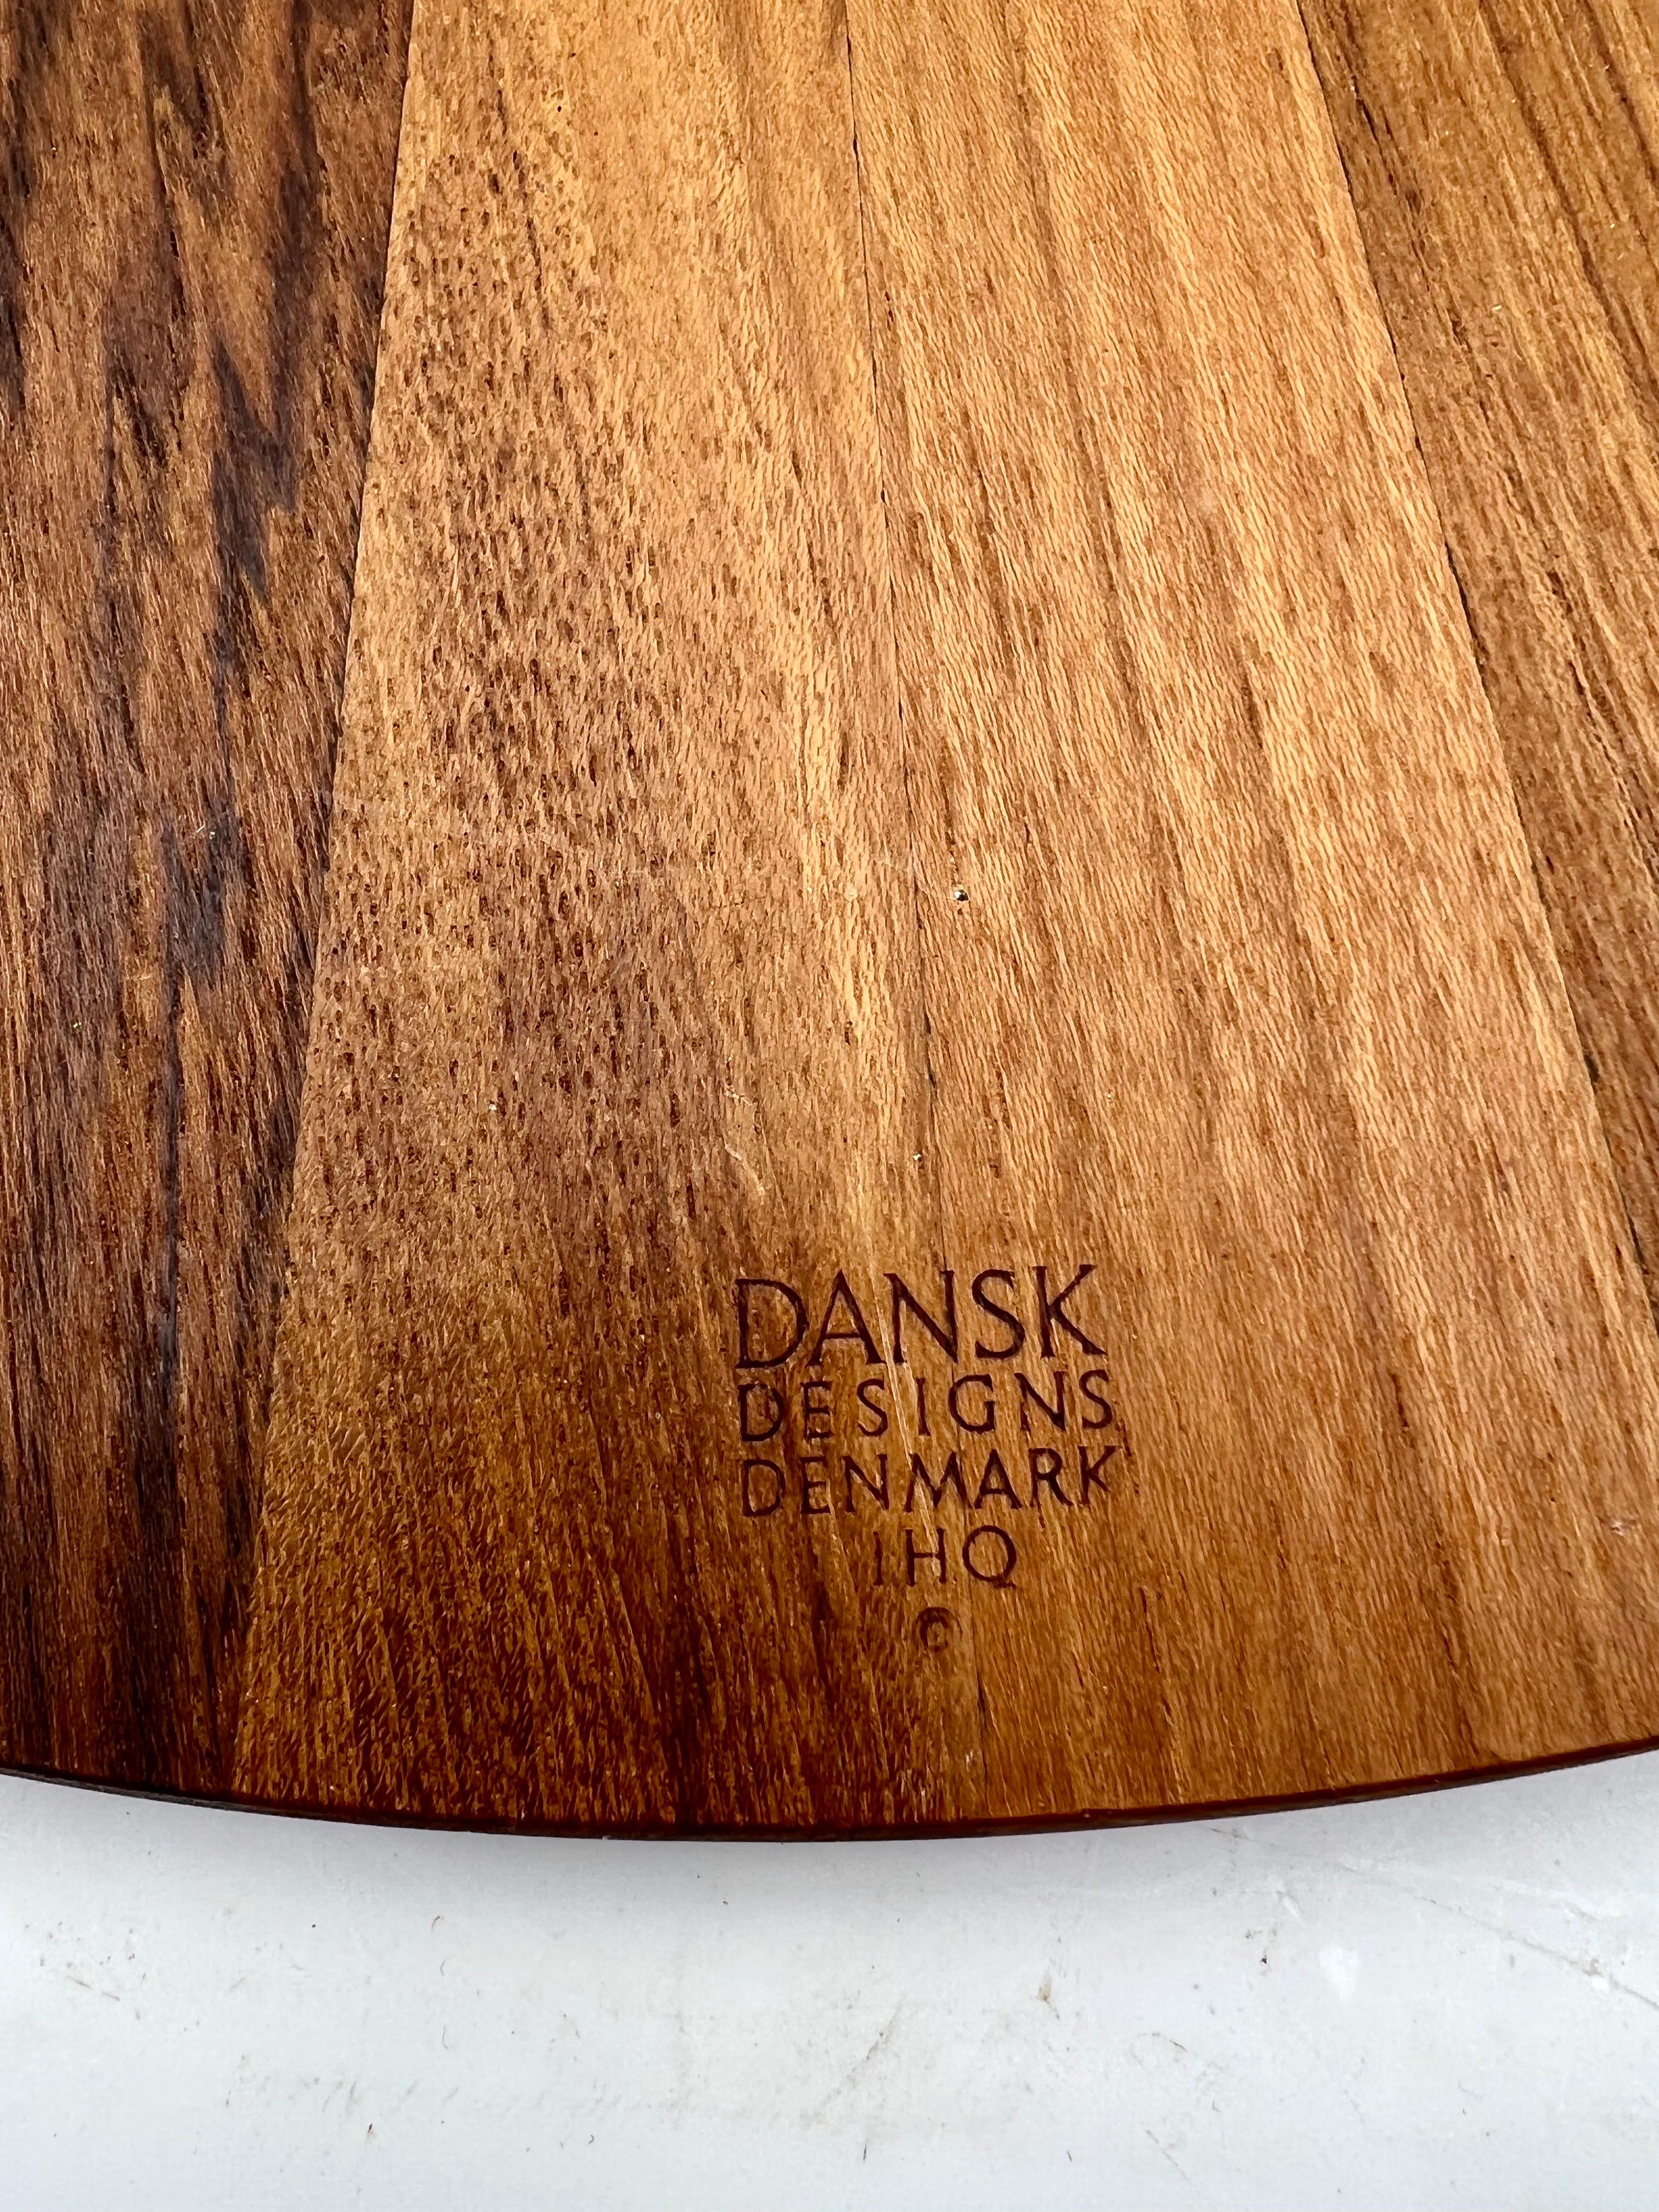 Danish Modern Solid Teak Rare Fan Trays Designed by Quistgaard For Dansk 2